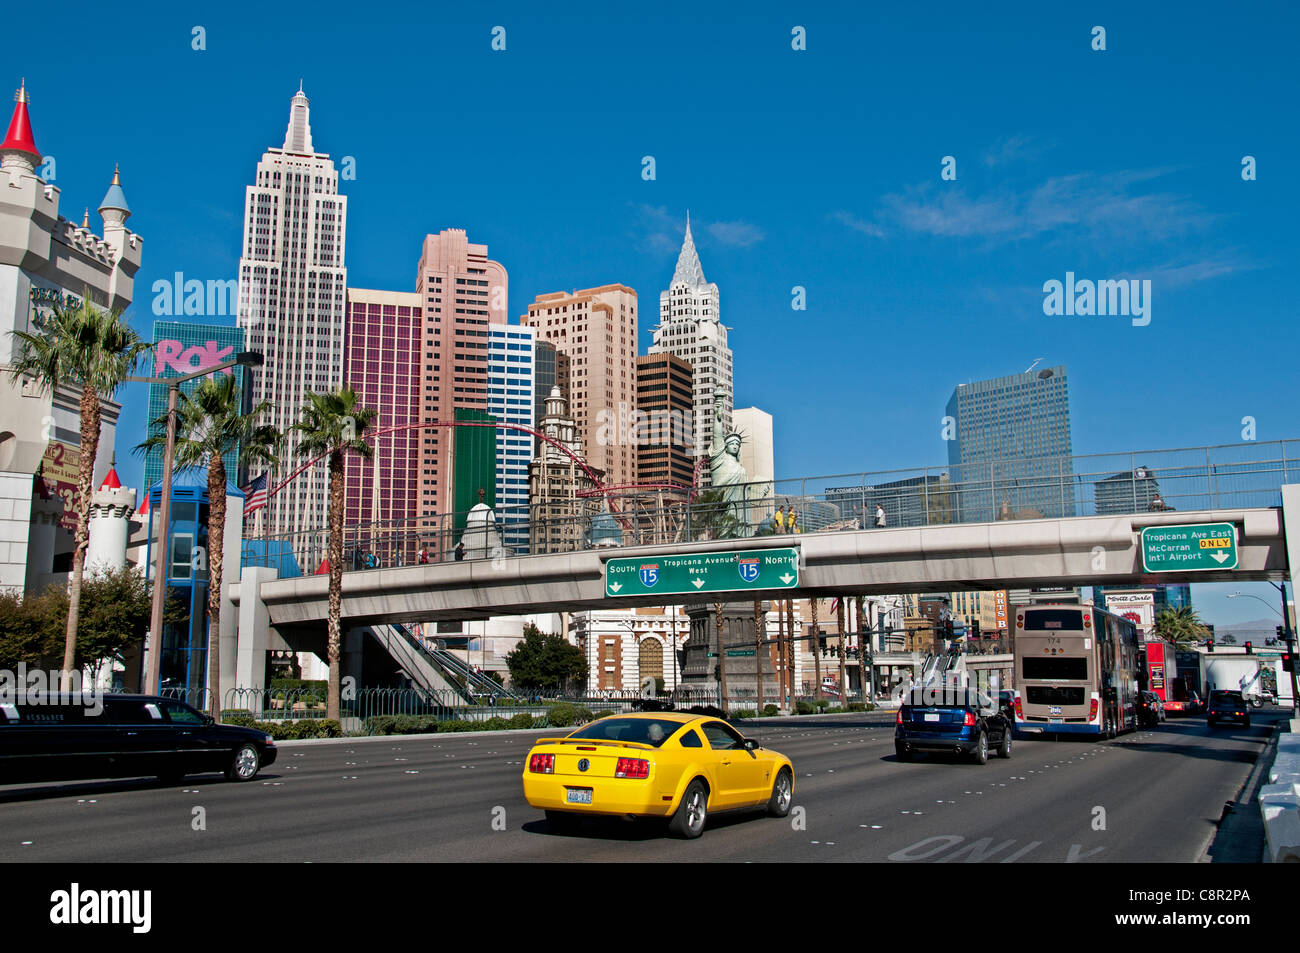 New York Casino Statue of Liberty Las Vegas Strip gambling capital of the World United States Nevada Stock Photo